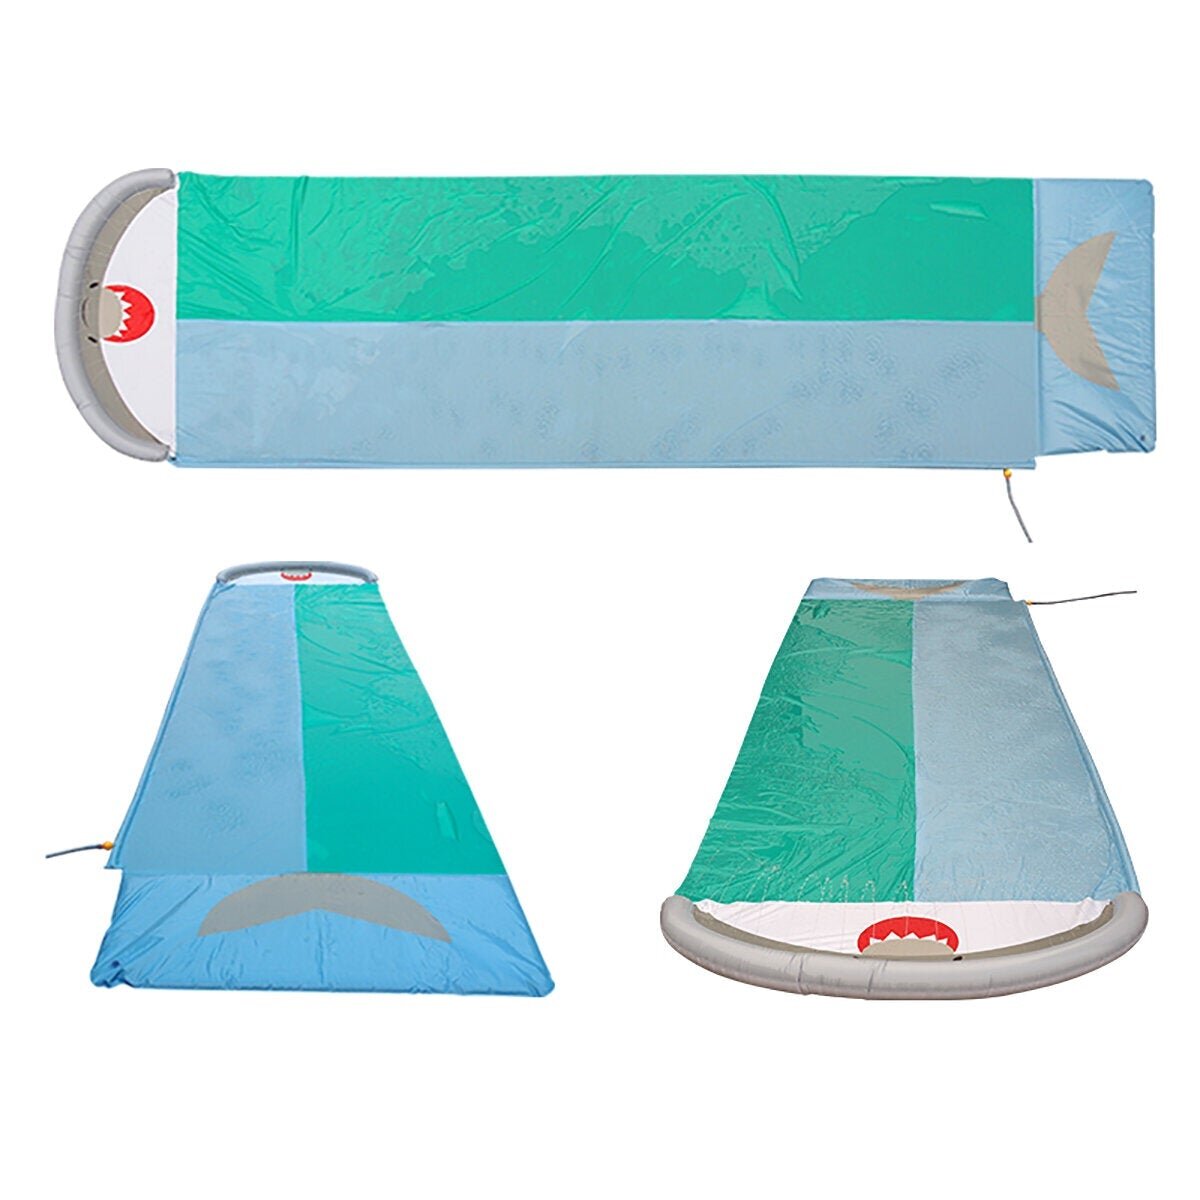 Summer watermelon/Shark Double Slipway Swiming Pool Play Mat